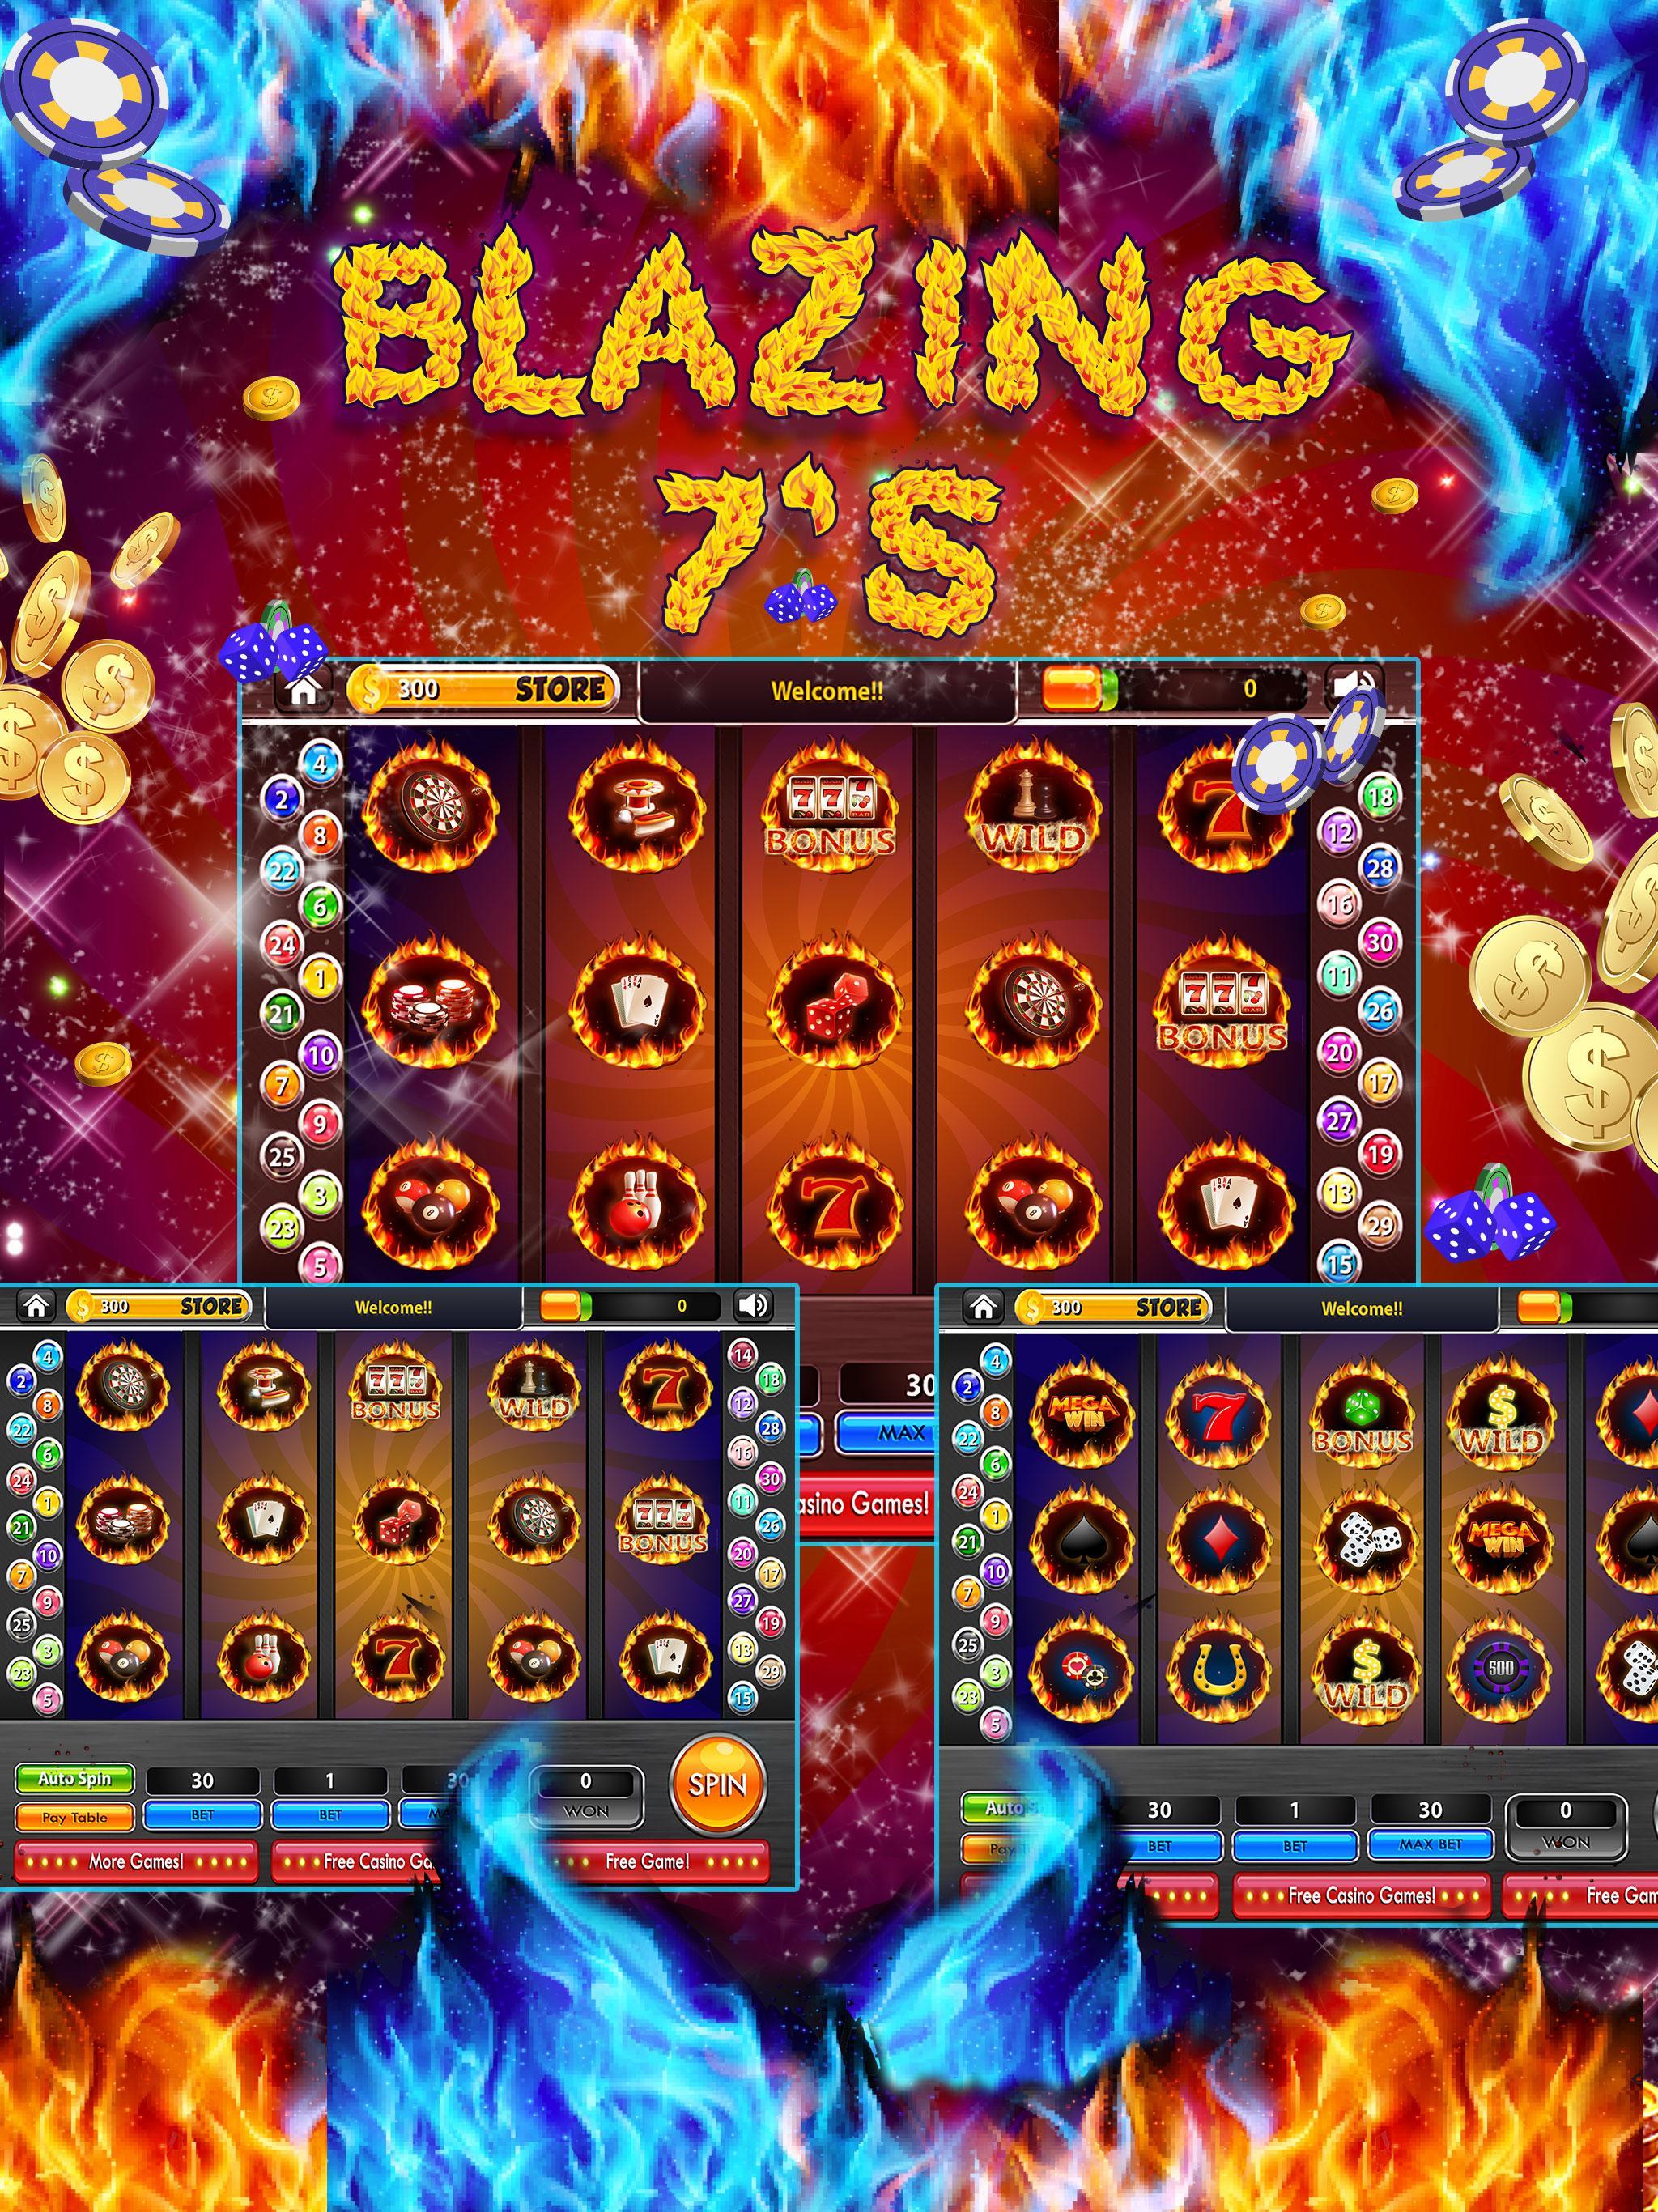 BEST SLOTS TO PLAY   The Blazing 7's Slot Machine. PROGRESSIVE JACKPOT WIN